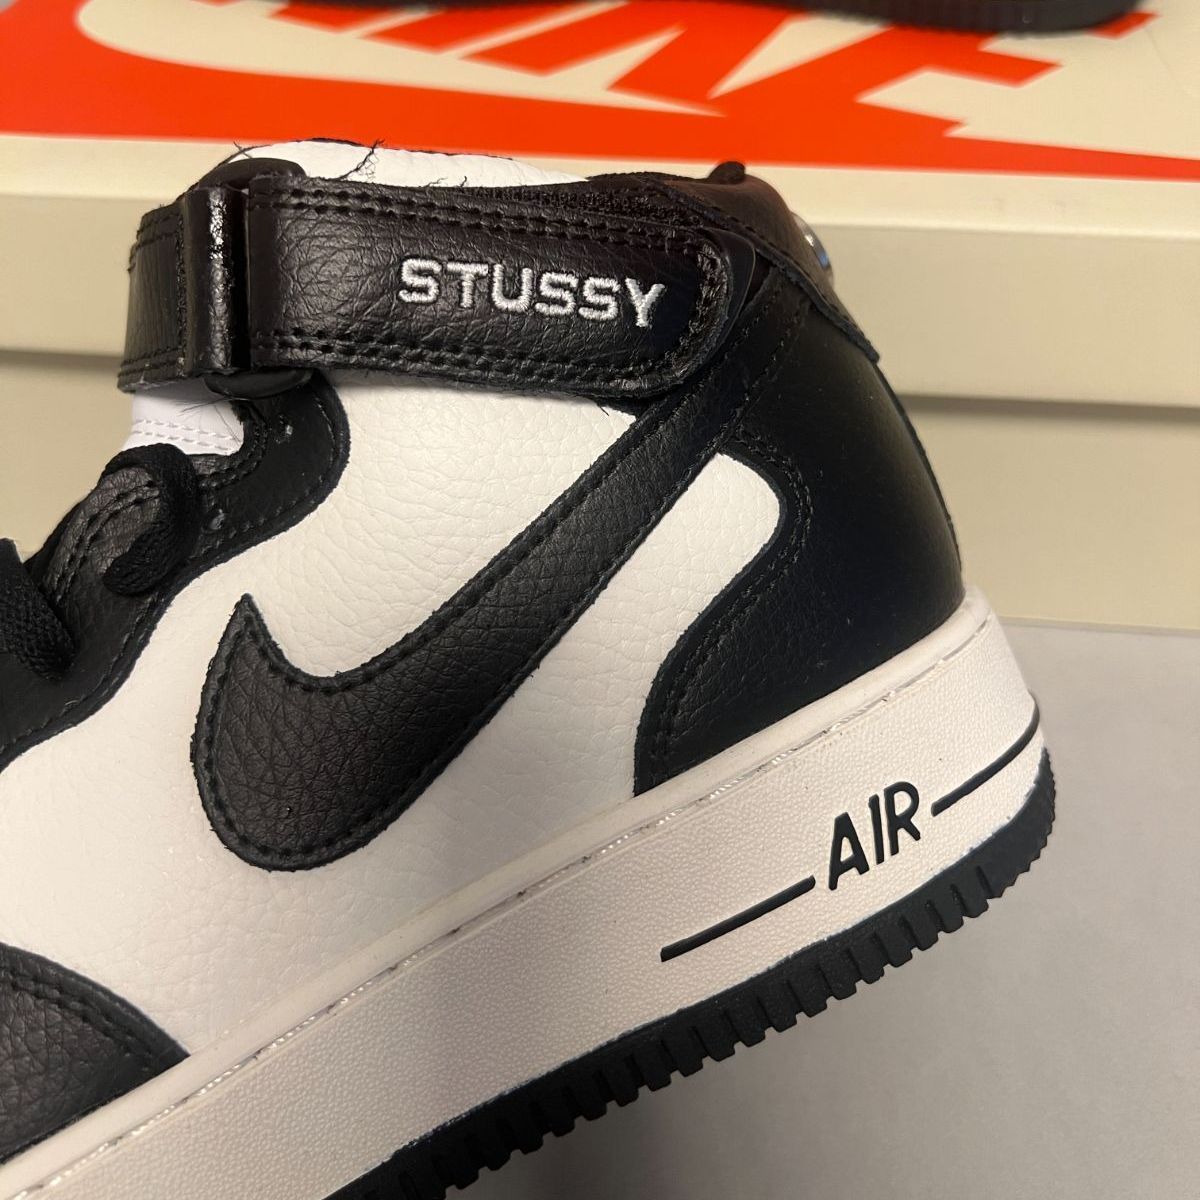 Stussy × Nike Air Force 1 Mid "Black and Light Bone" ステューシー × ナイキ エアフォース1 ミッド "ブラック アンド ライトボーン"